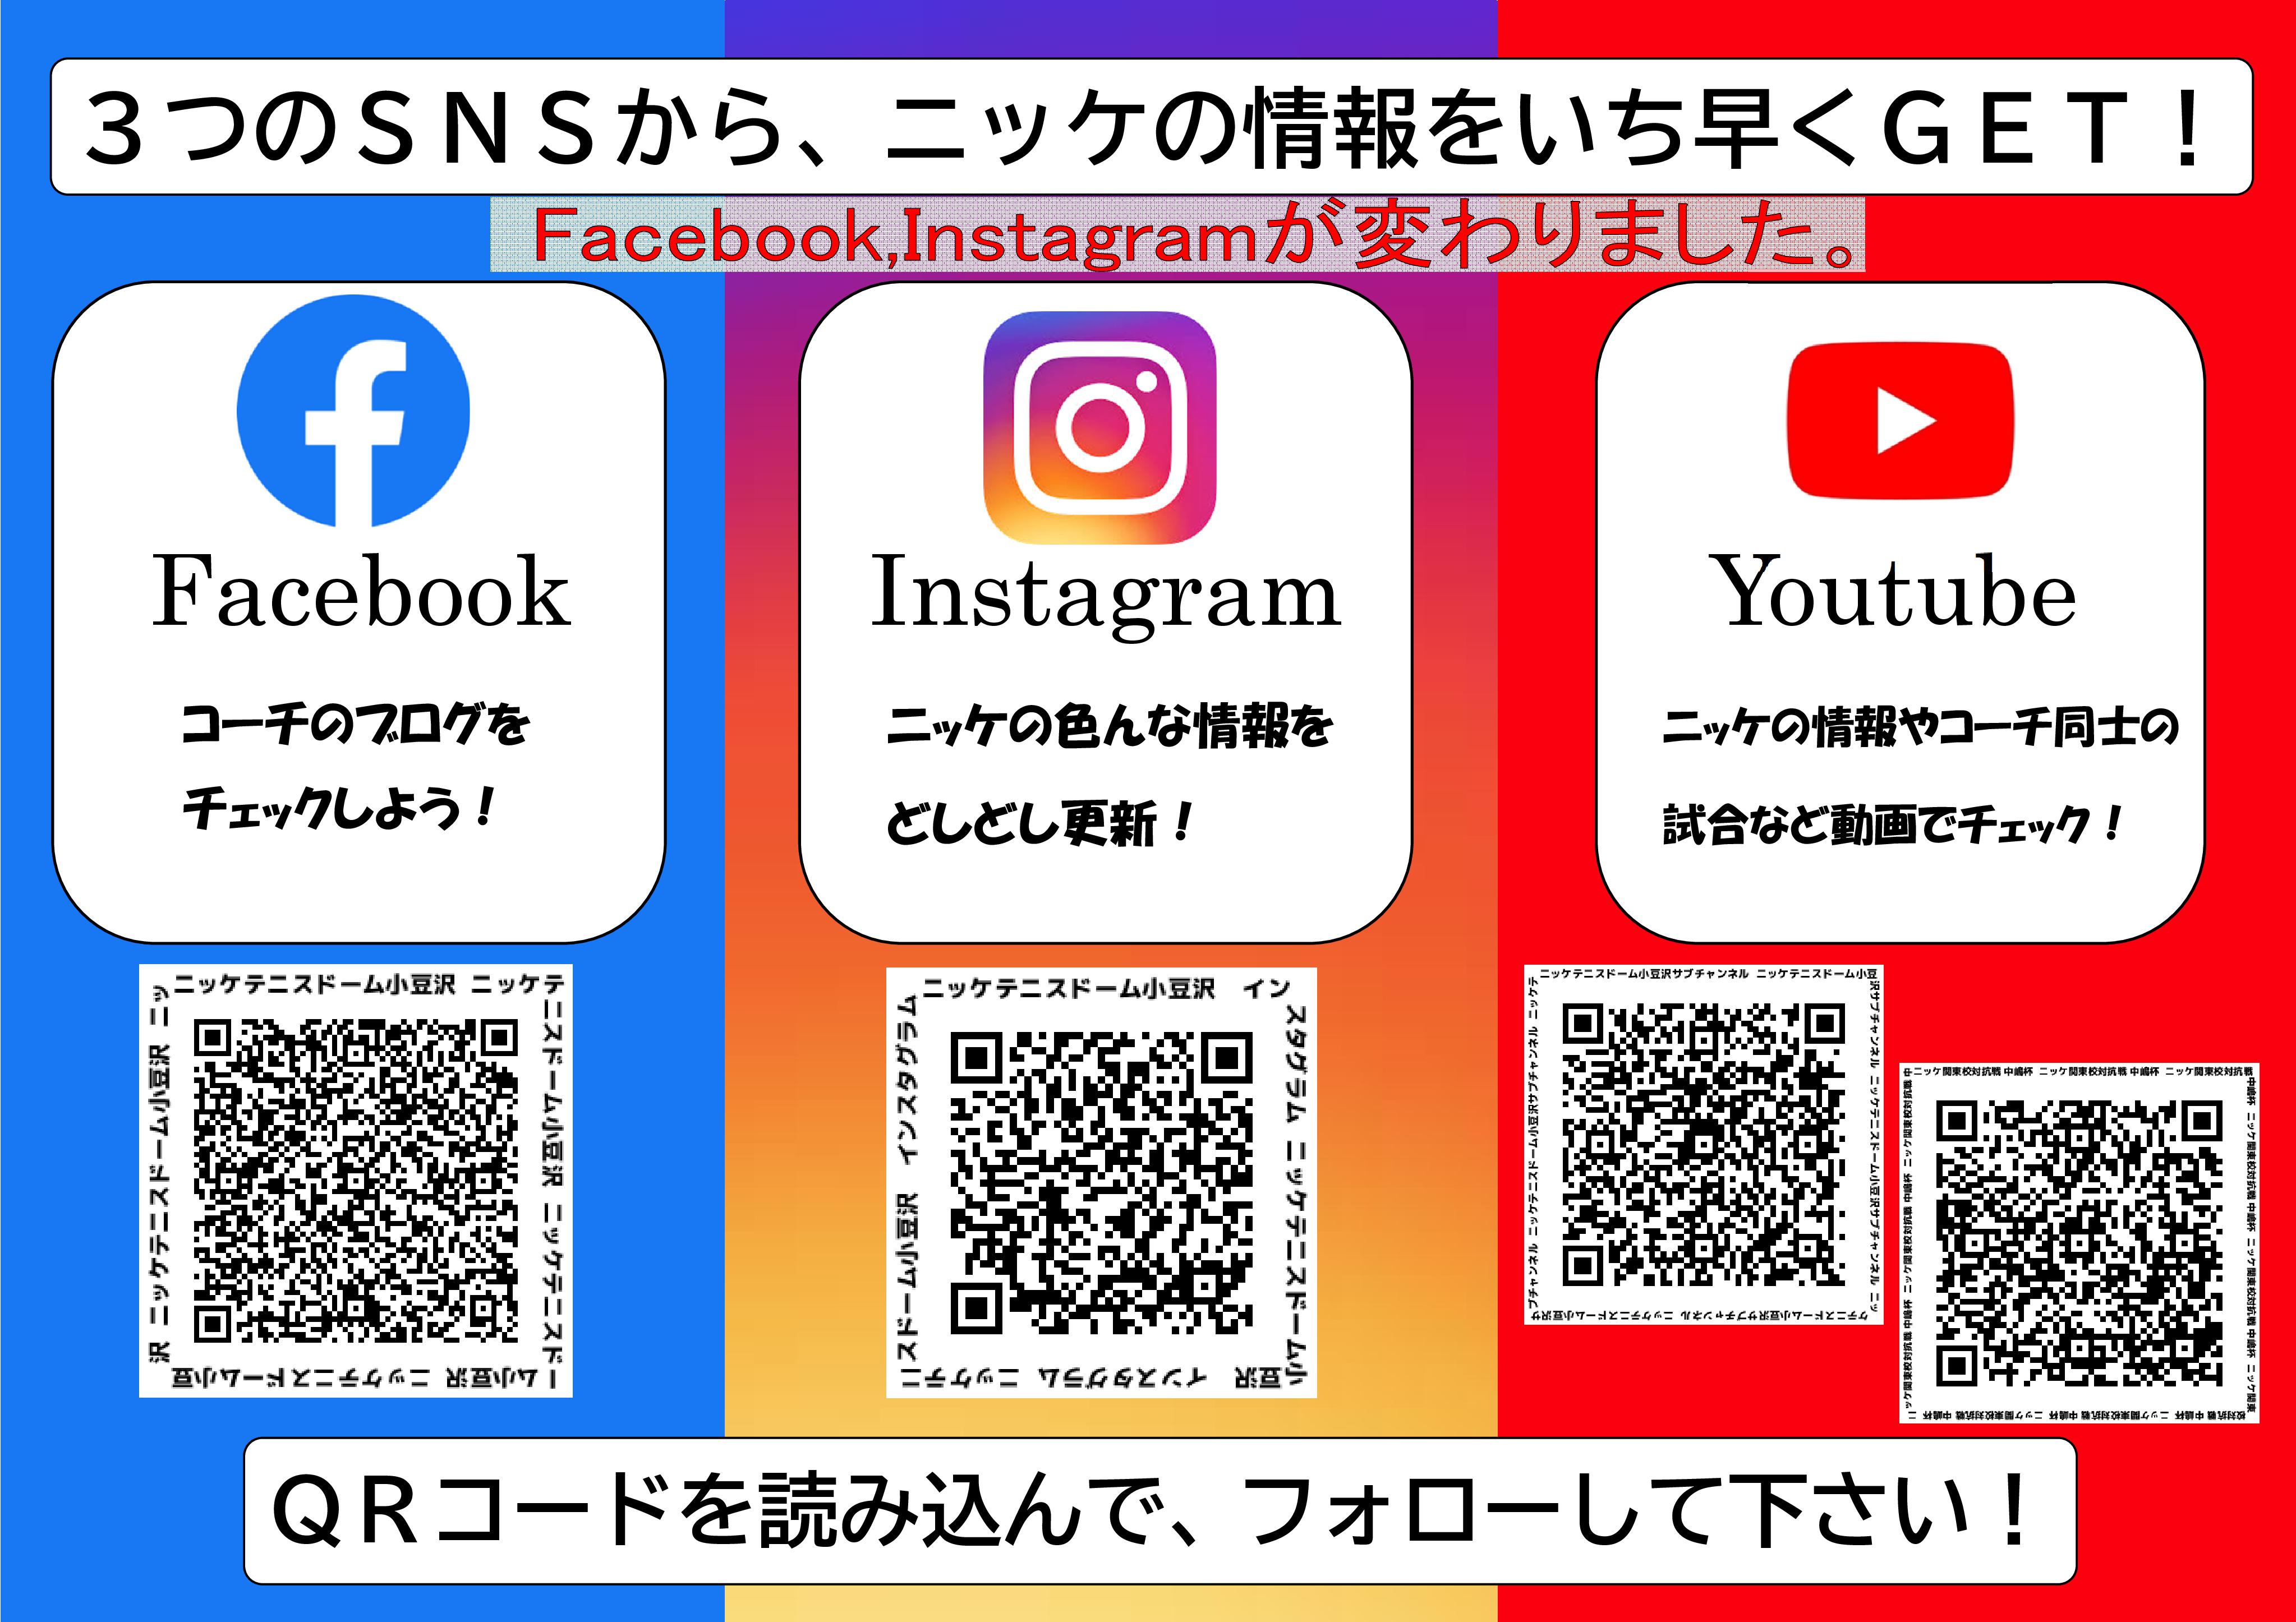 Facebook Instagramの変更のお知らせ ニッケテニスドーム小豆沢